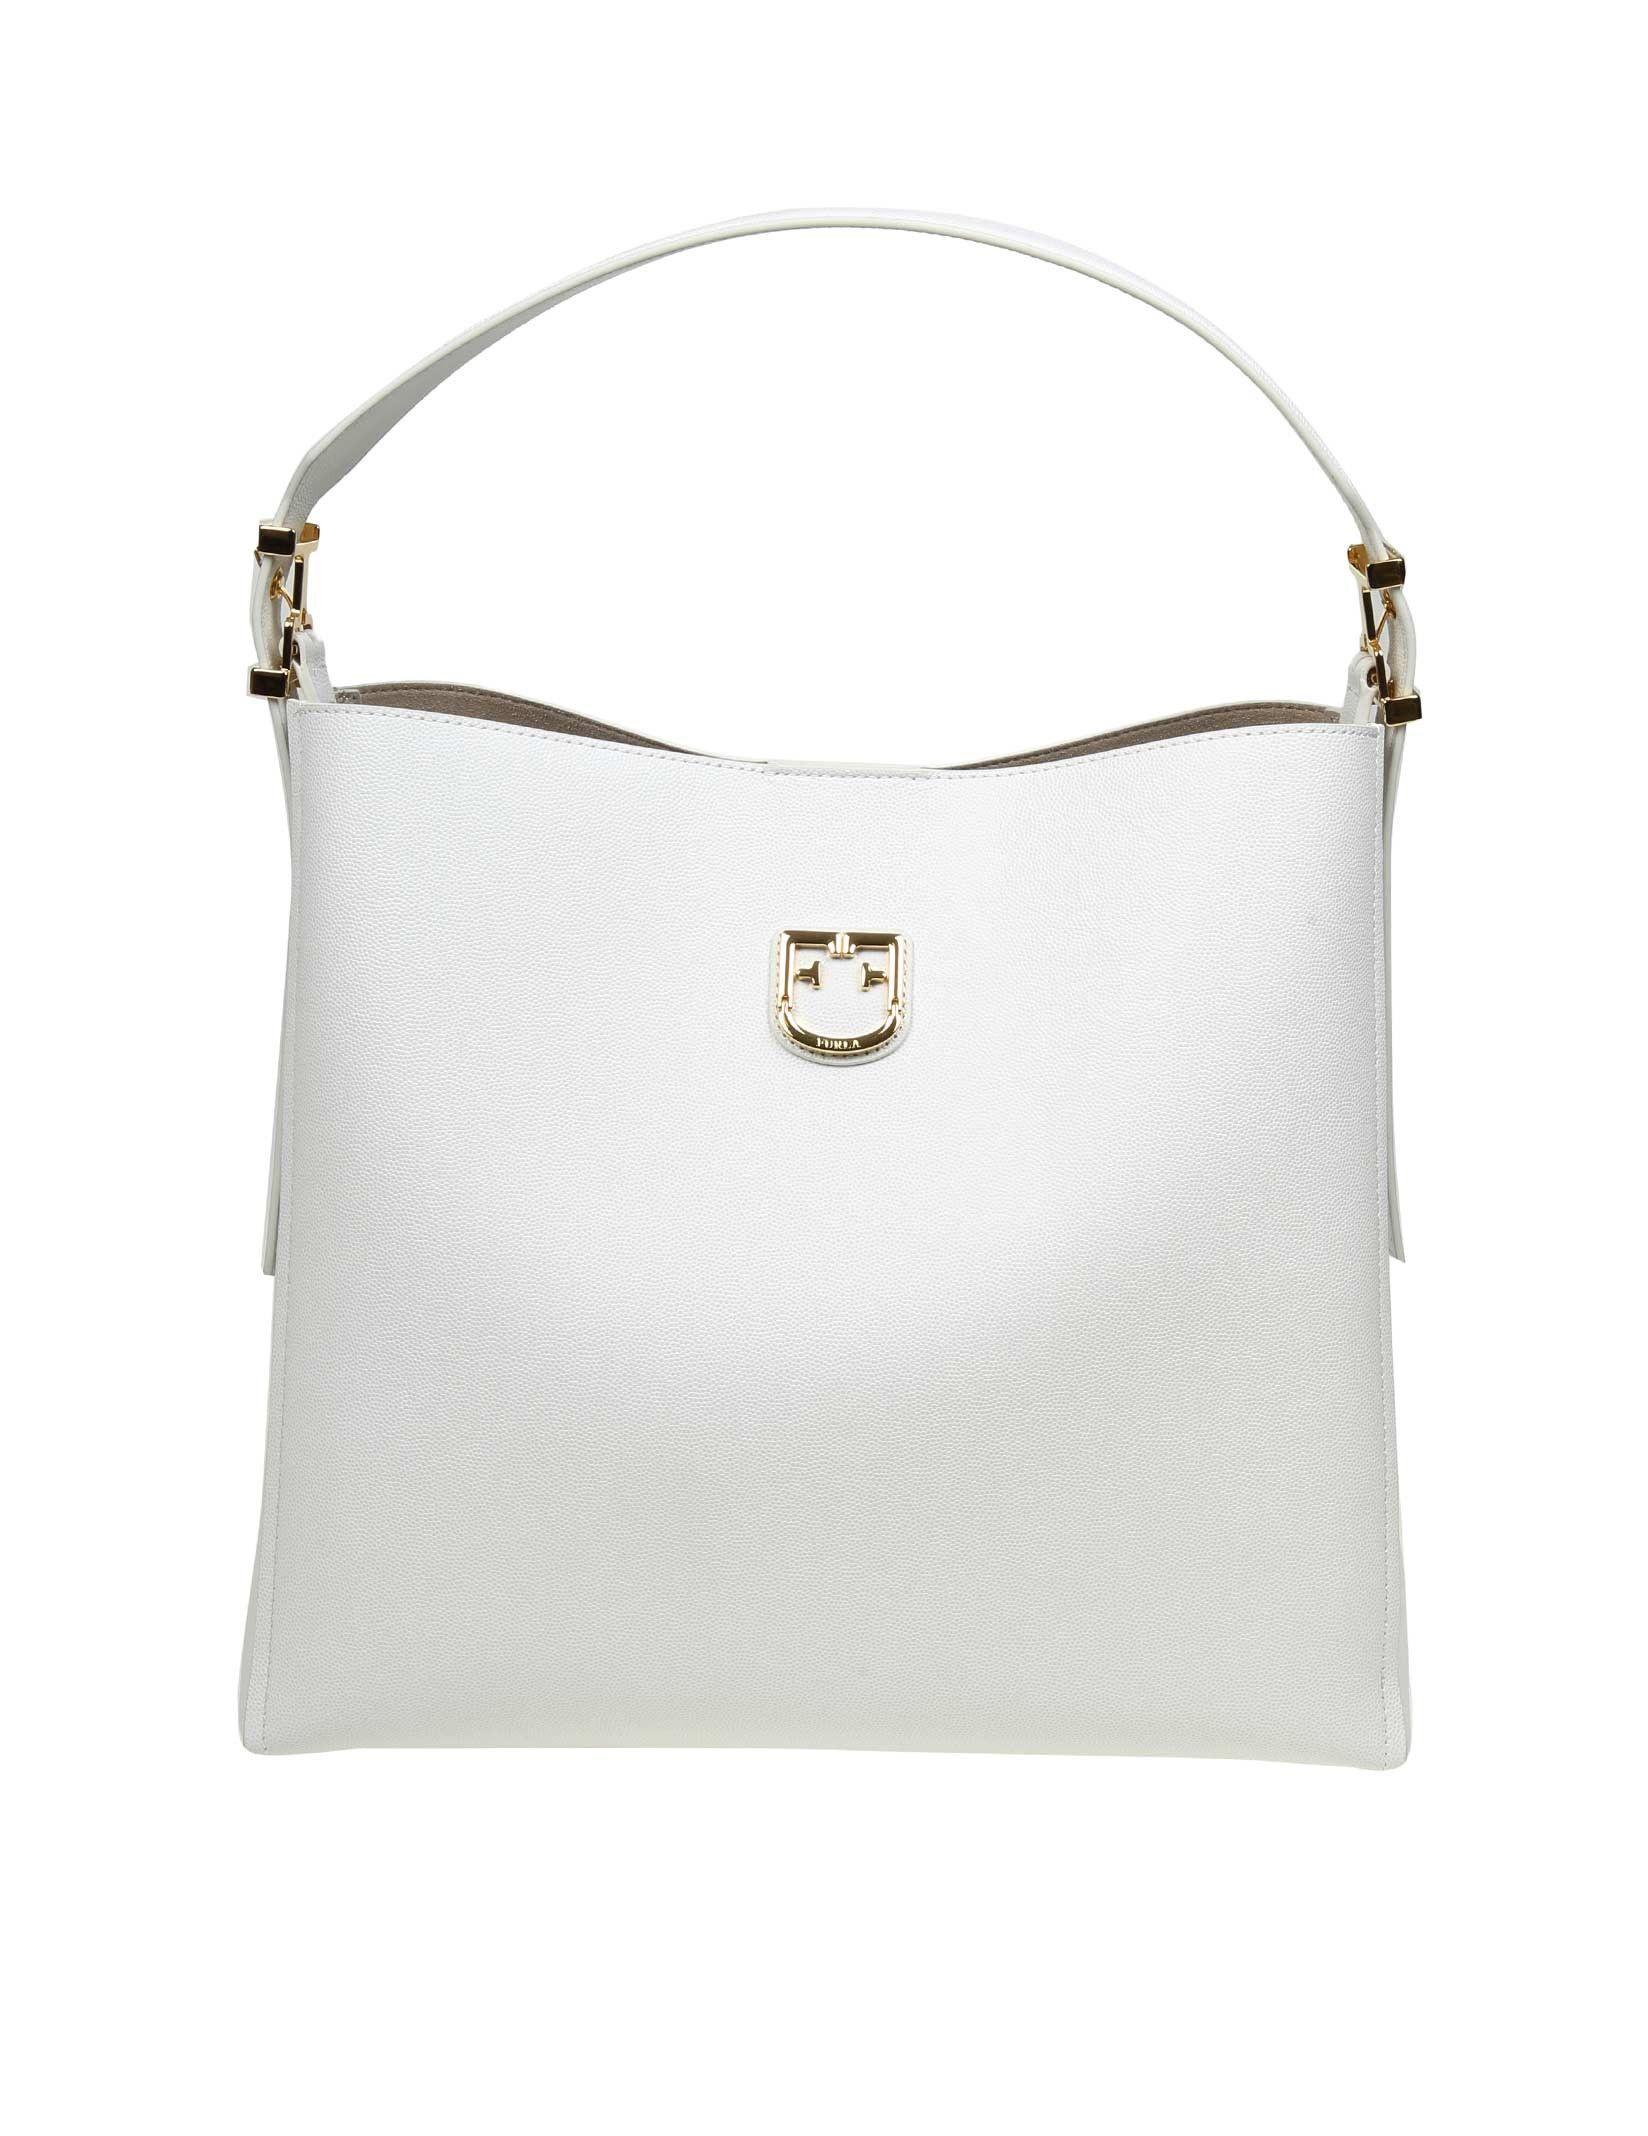 Furla White Leather Handbag - Lyst